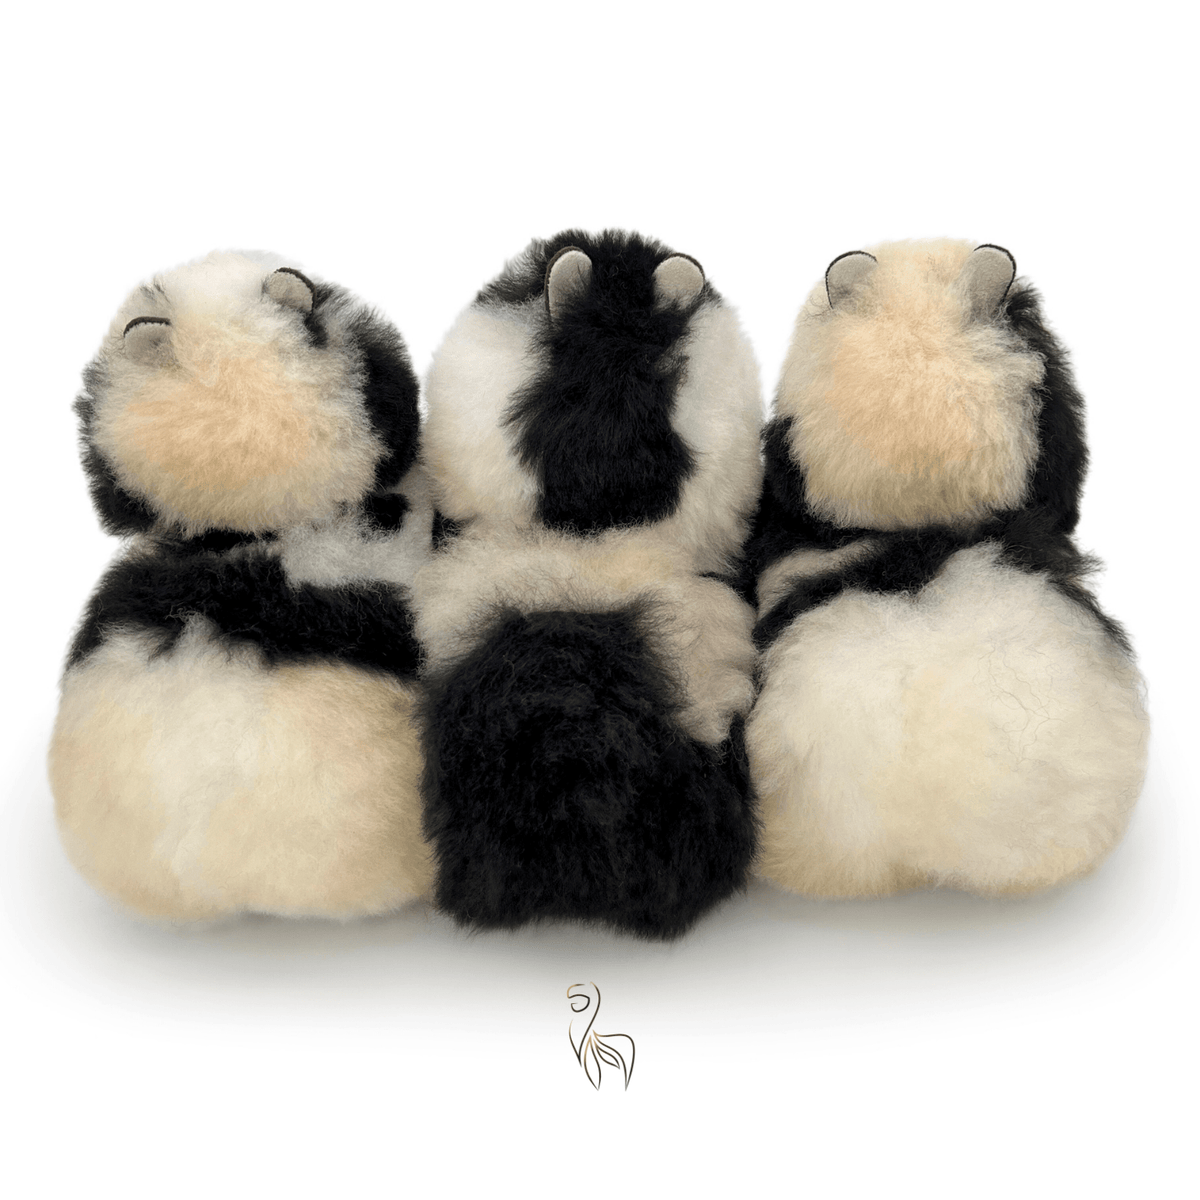 Honeybee - Small Alpaca Toy (23cm) - Limited Edition